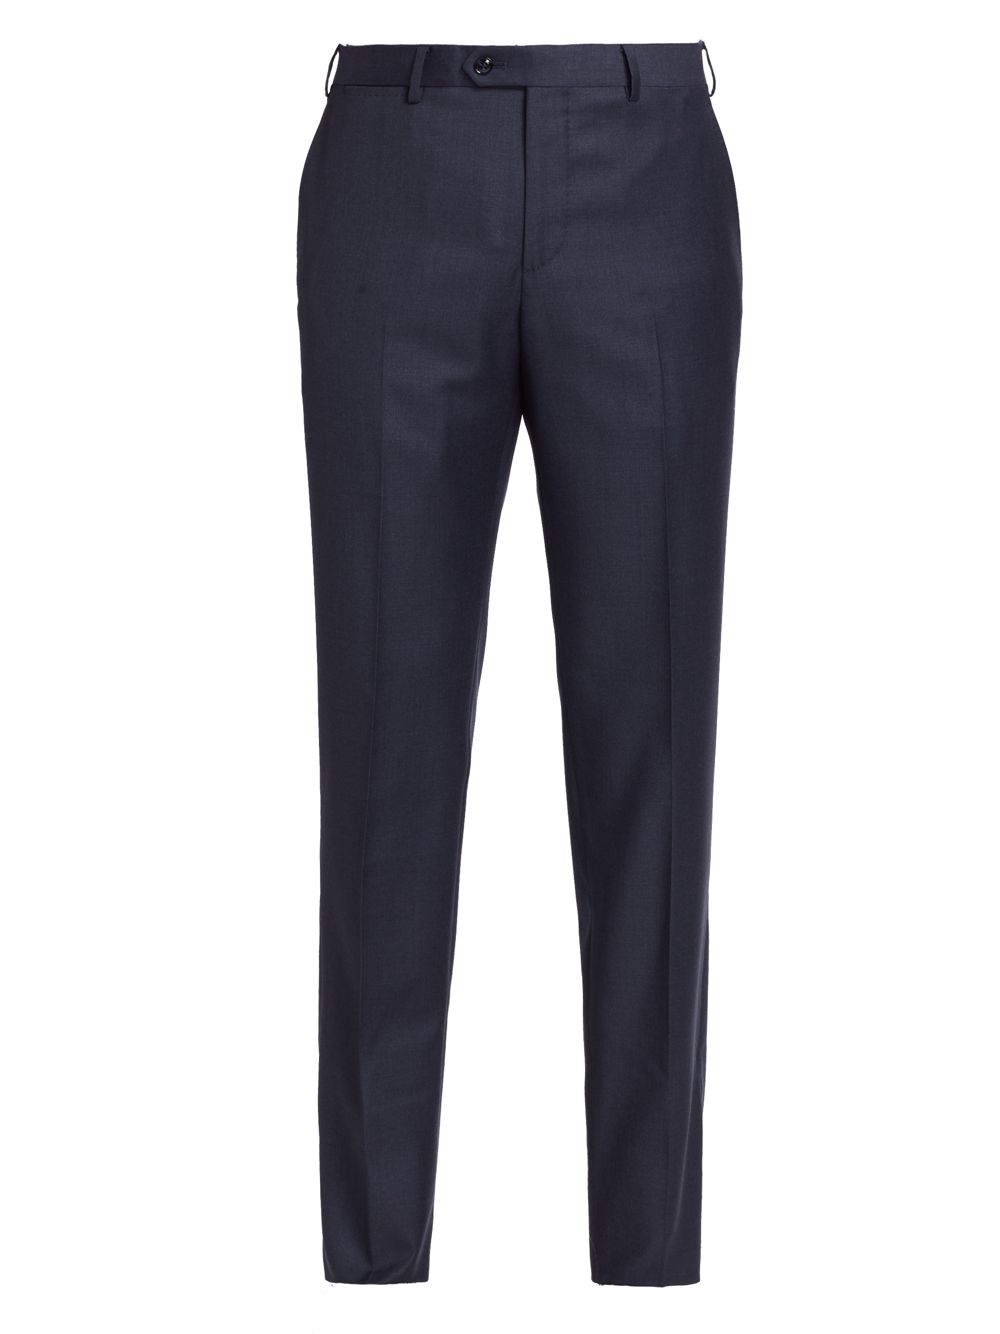 Классические шерстяные брюки Giorgio Armani, коричневый брюки шерстяные классические 46 размер